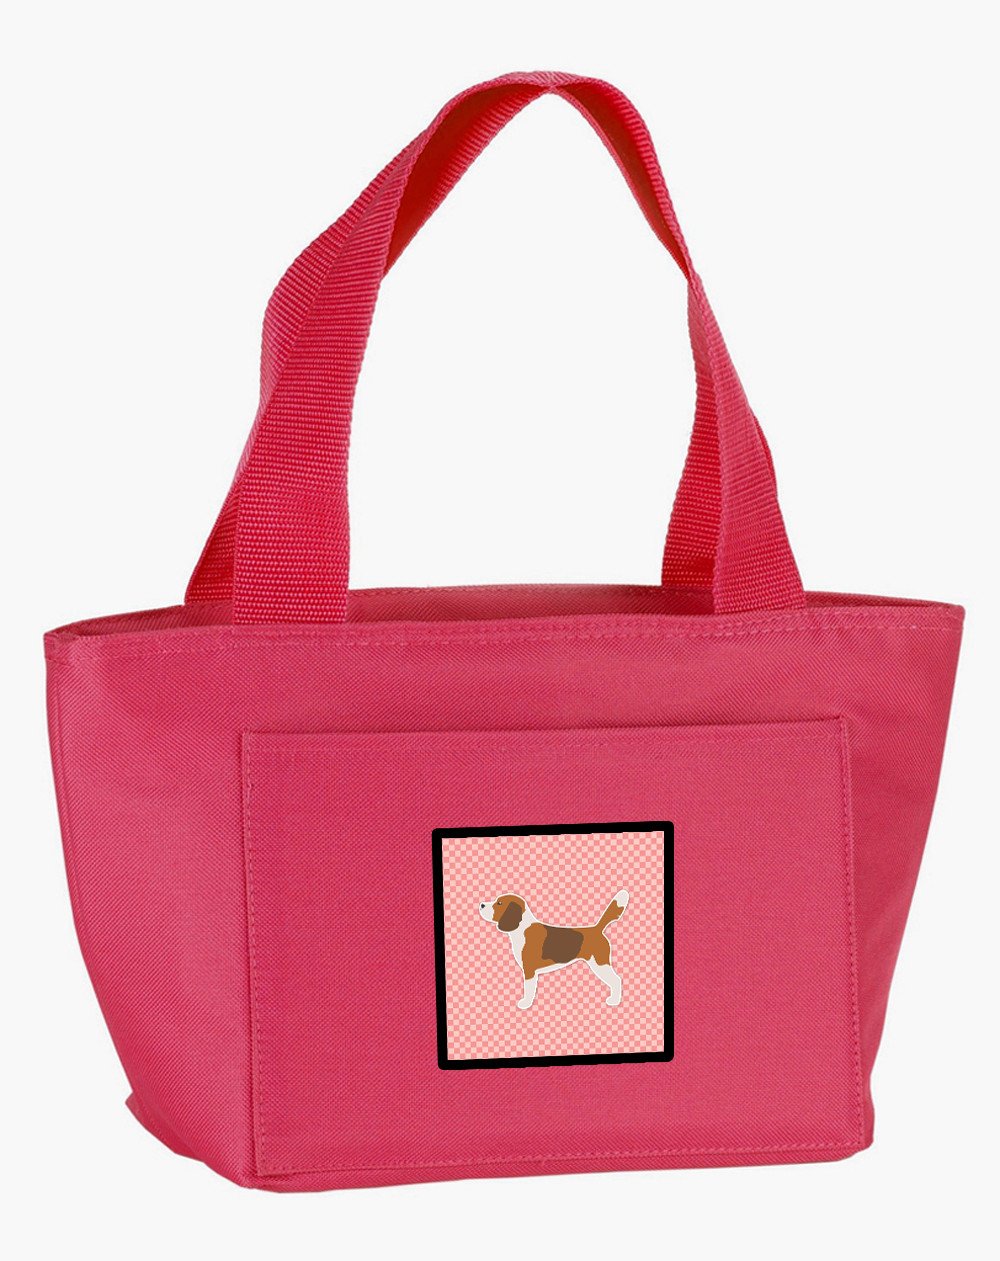 Beagle Checkerboard Pink Lunch Bag BB3610PK-8808 by Caroline's Treasures